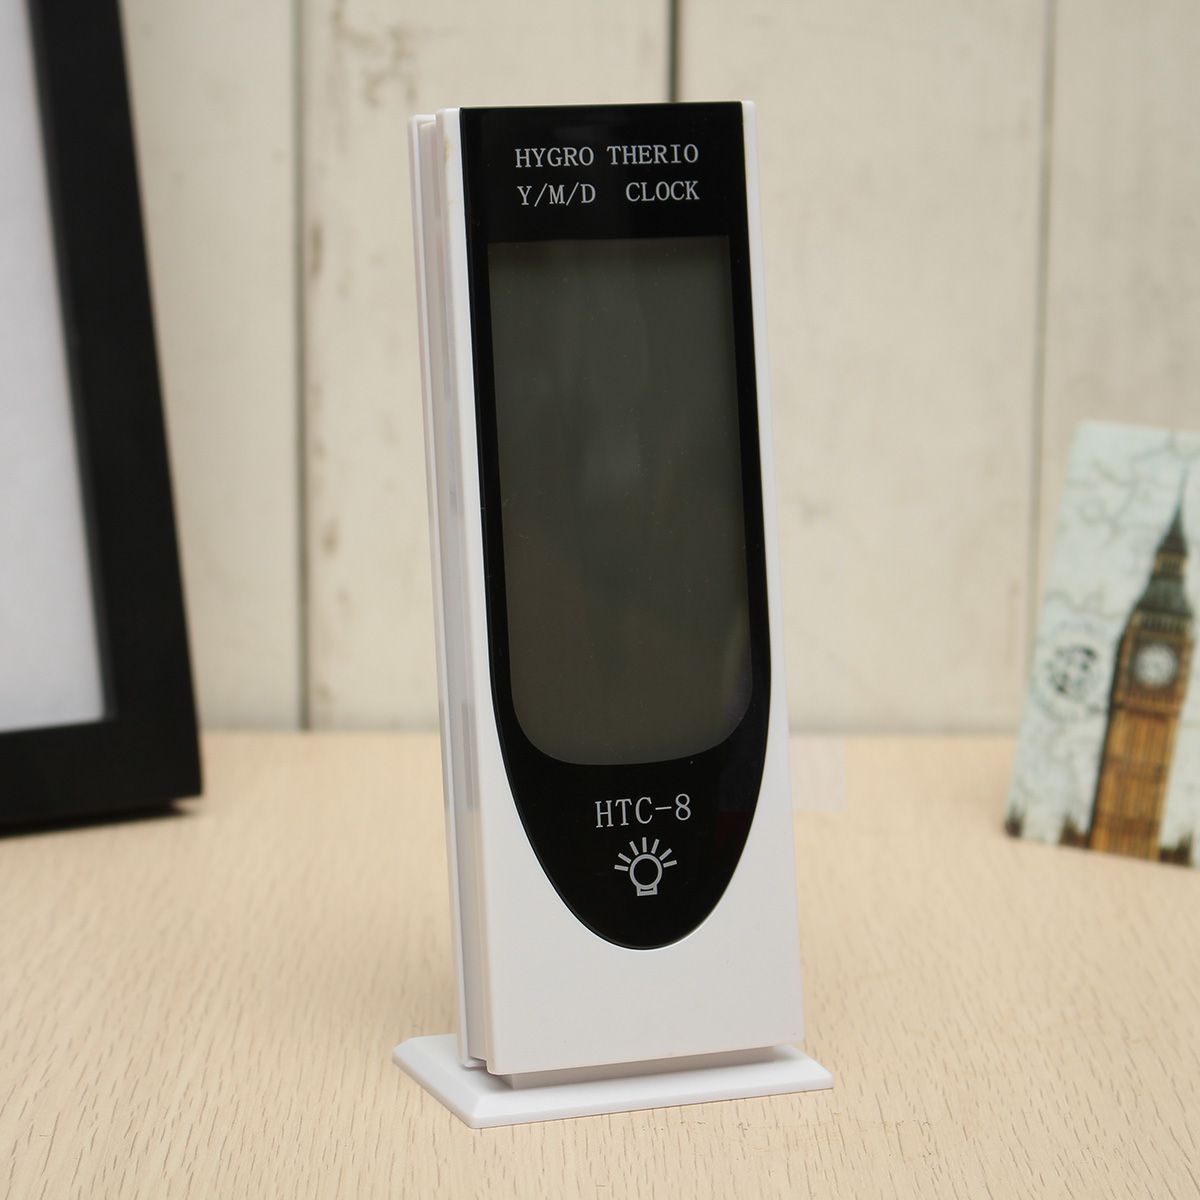 Digital-Large-LCD-Alarm-Clock-Thermometer-Calendar-Hygrometer-with-Night-Light-1132261